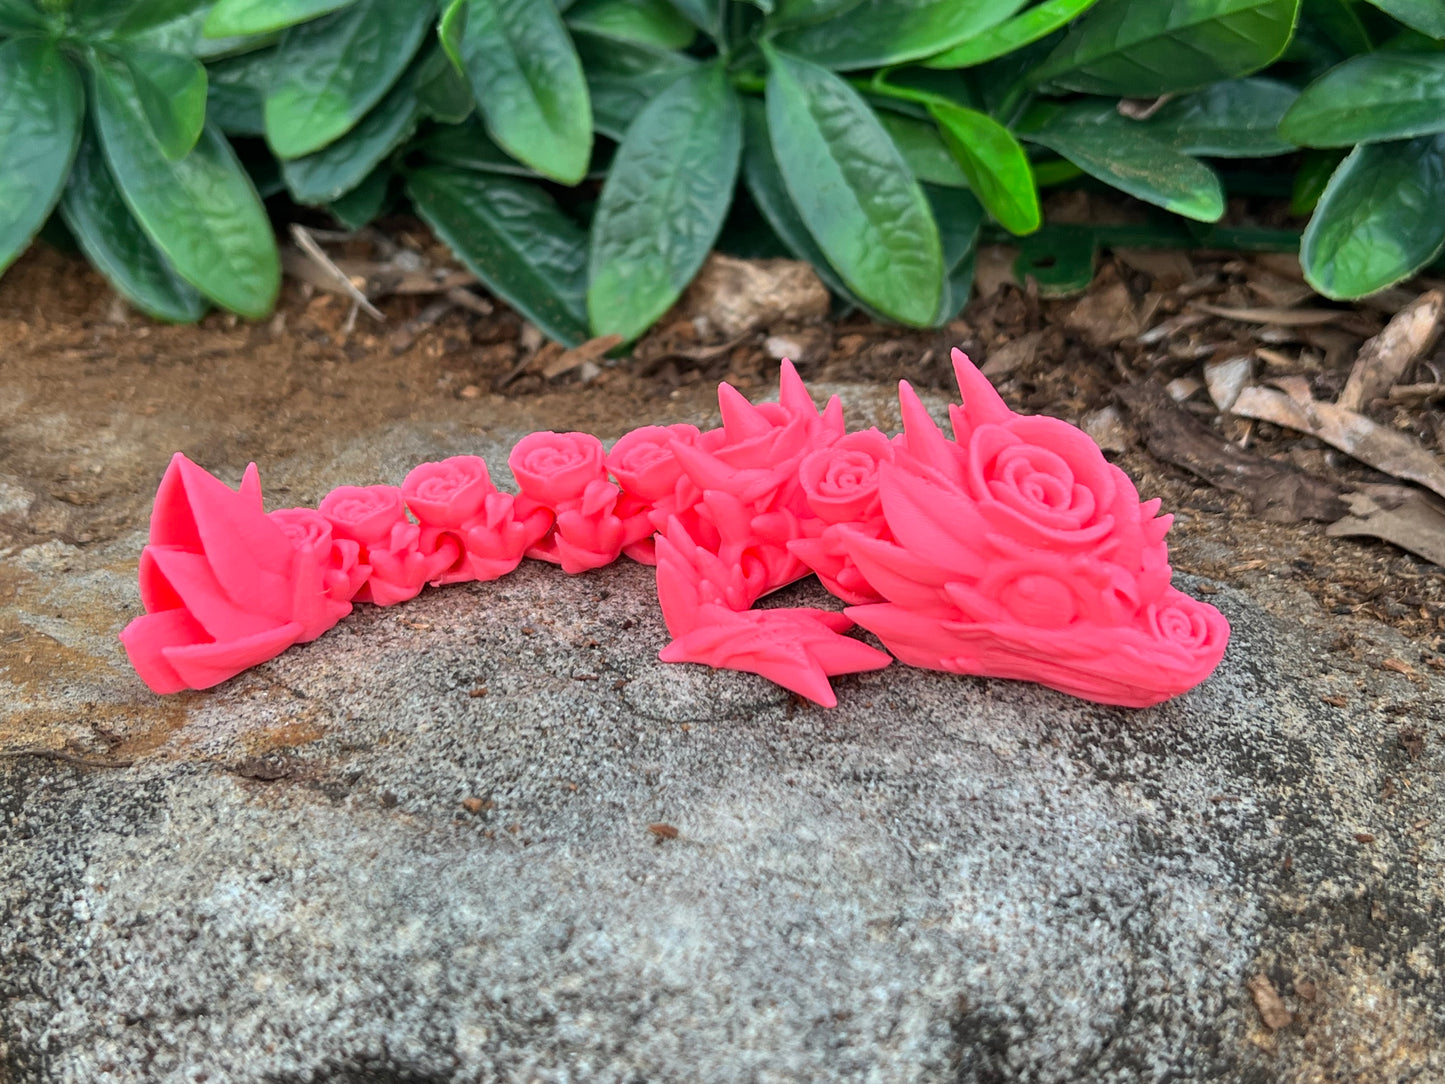 Rose Dragon Tadling